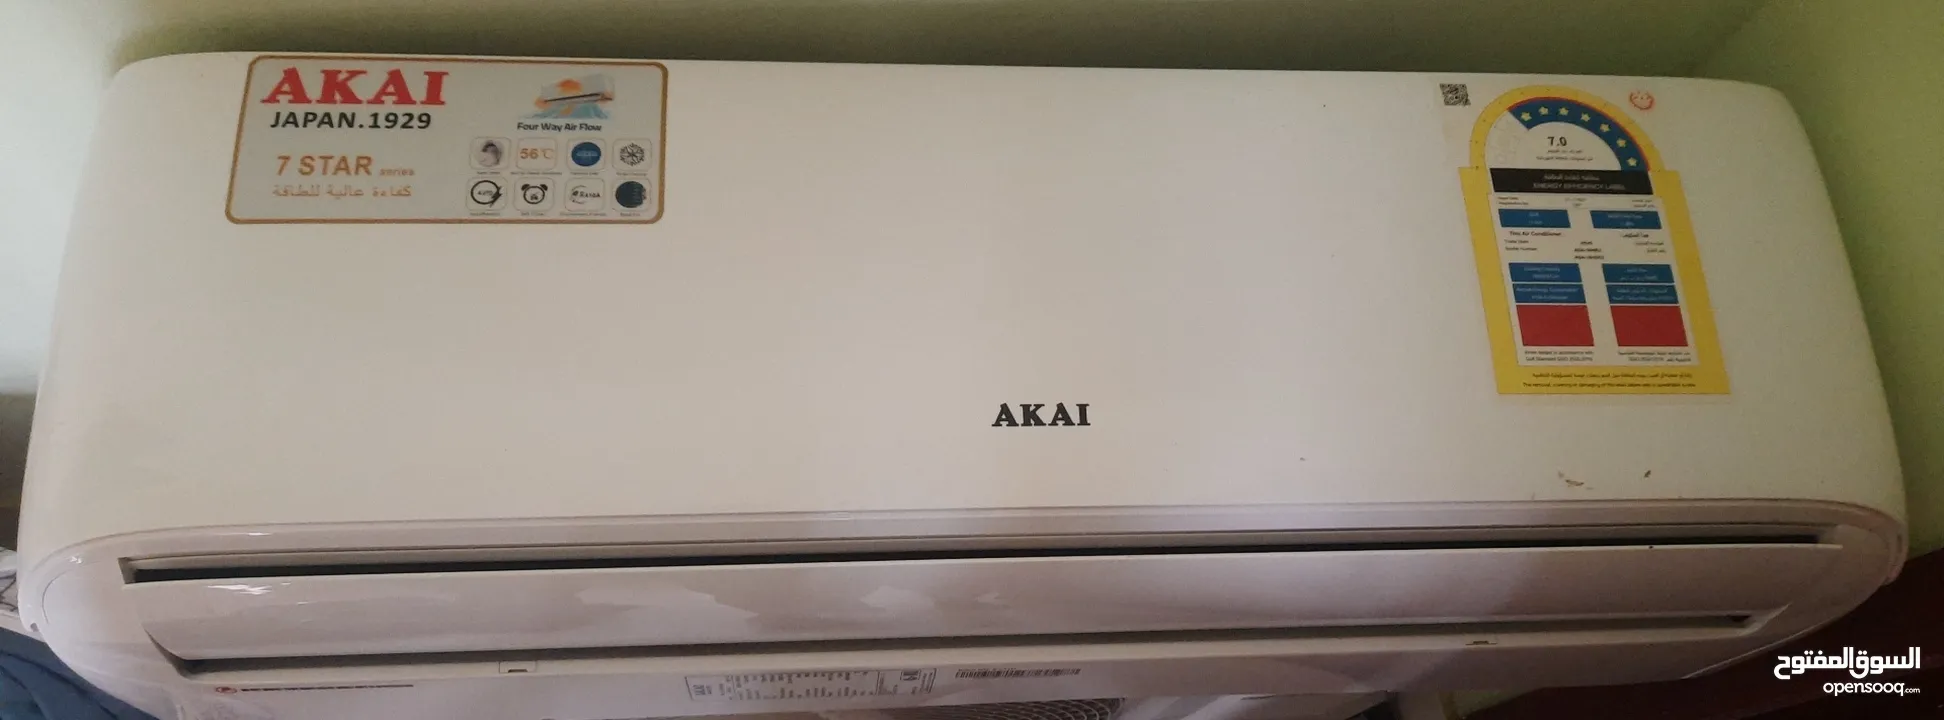 Akai ac for sale